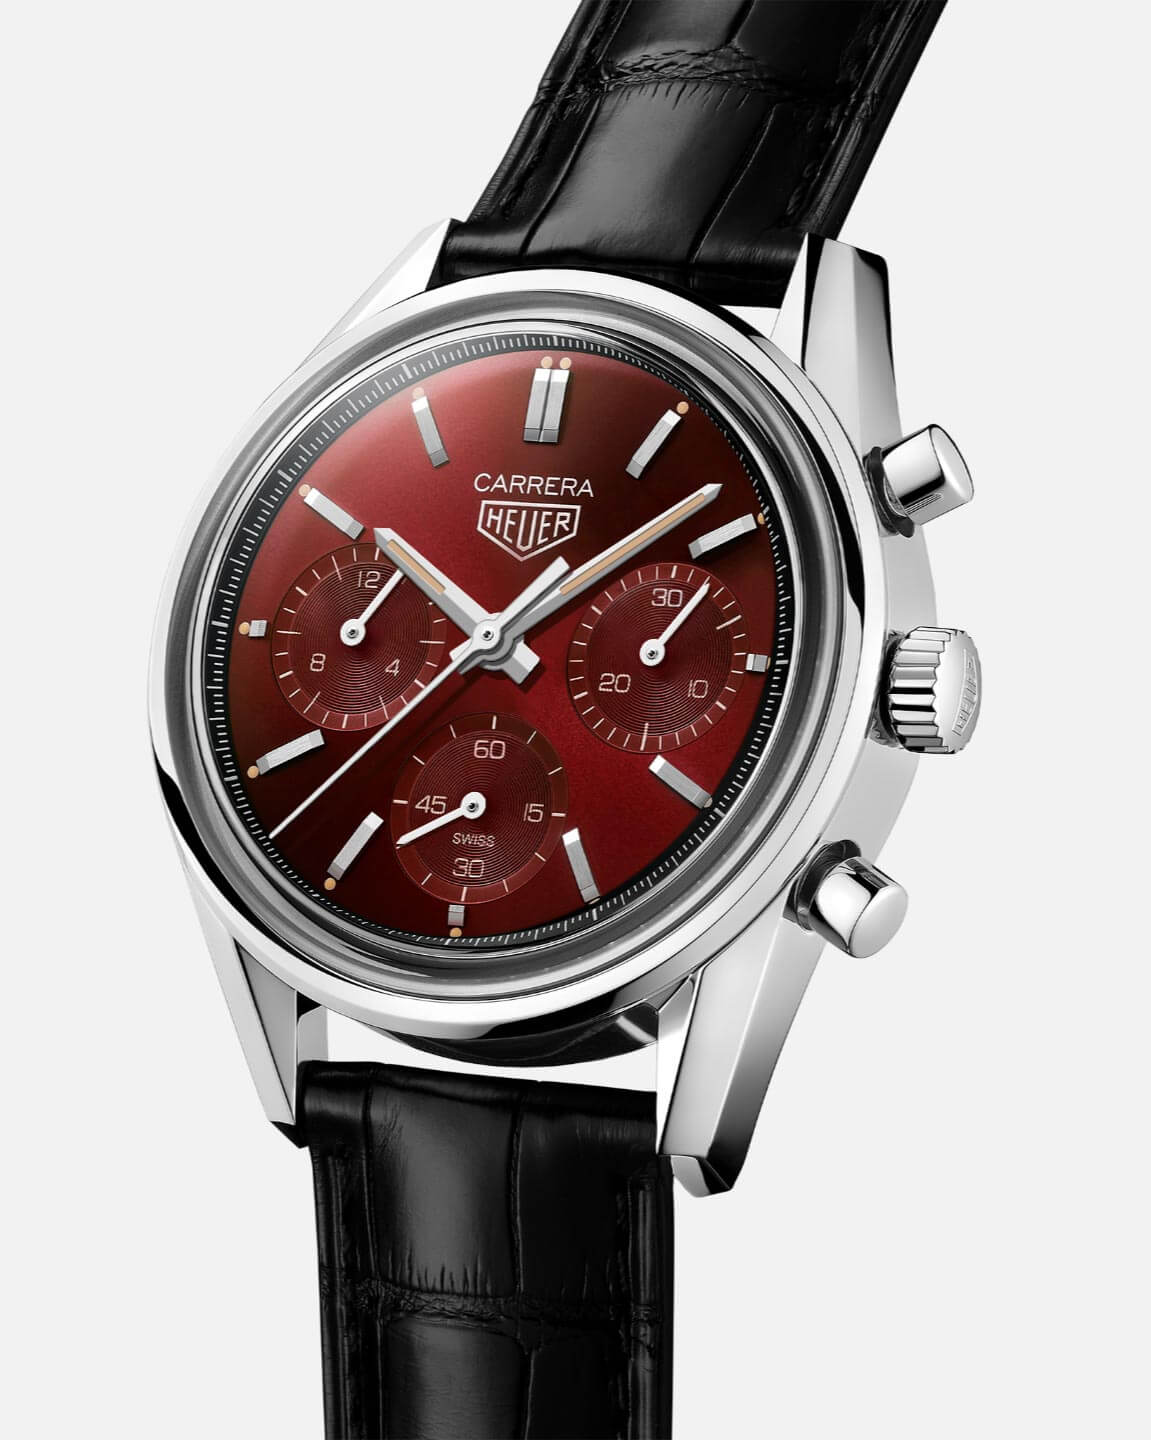 TAG HEUER Monaco Men's Limited Ed. Vintage Chrono Steel Watch - $16K A